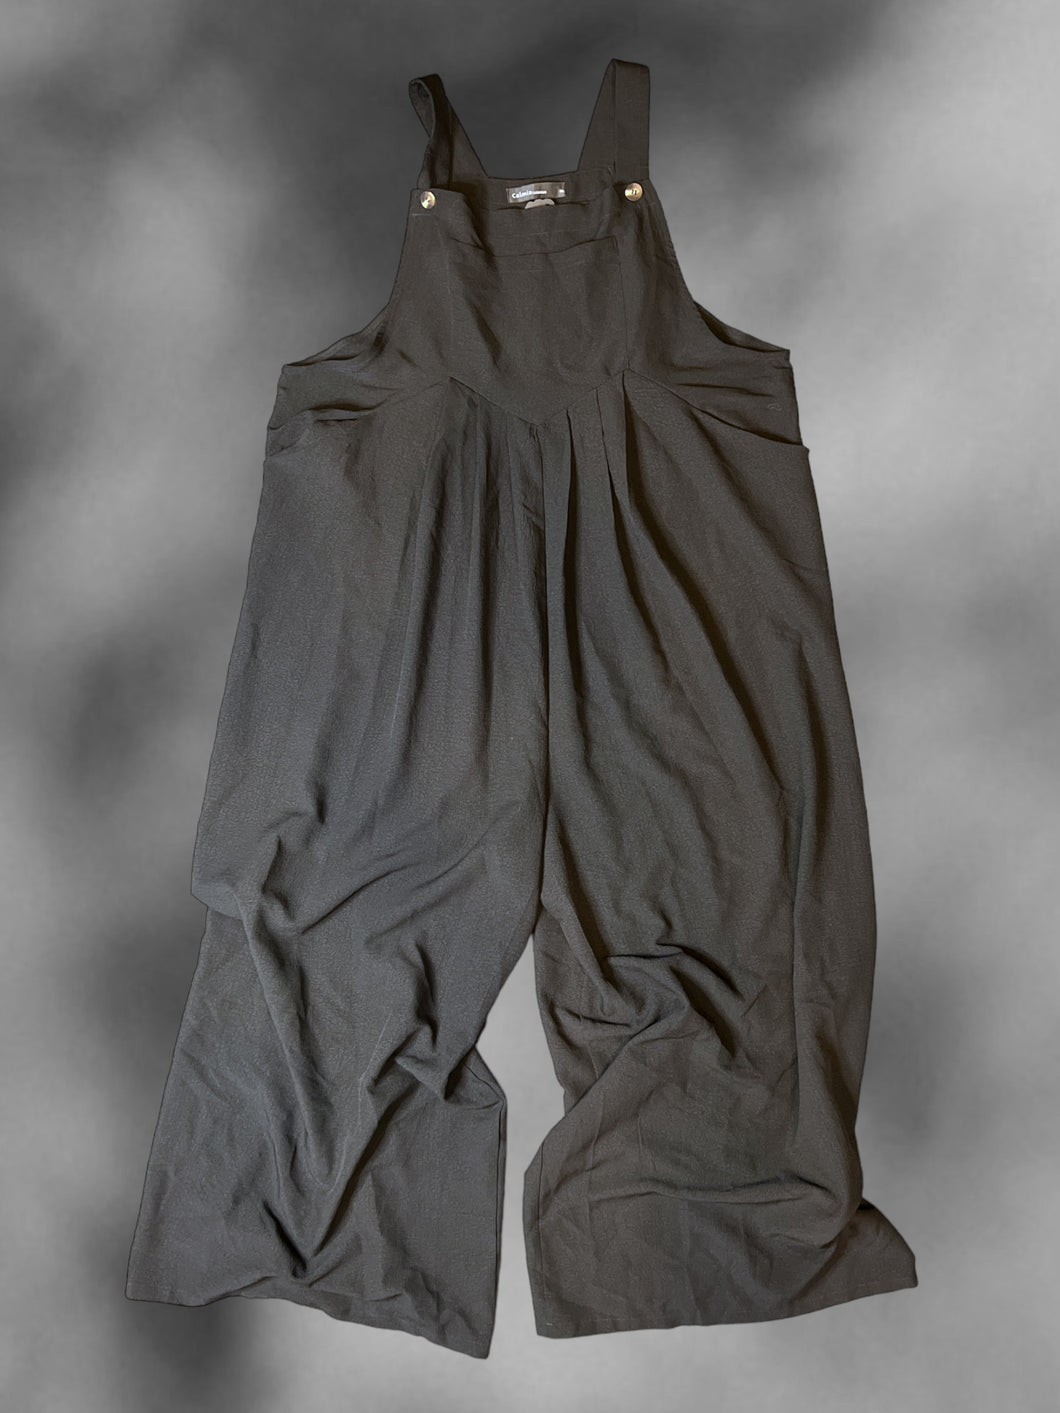 2X Black sleeveless wide leg jumpsuit w/ button adjustable straps, pleating, & pockets